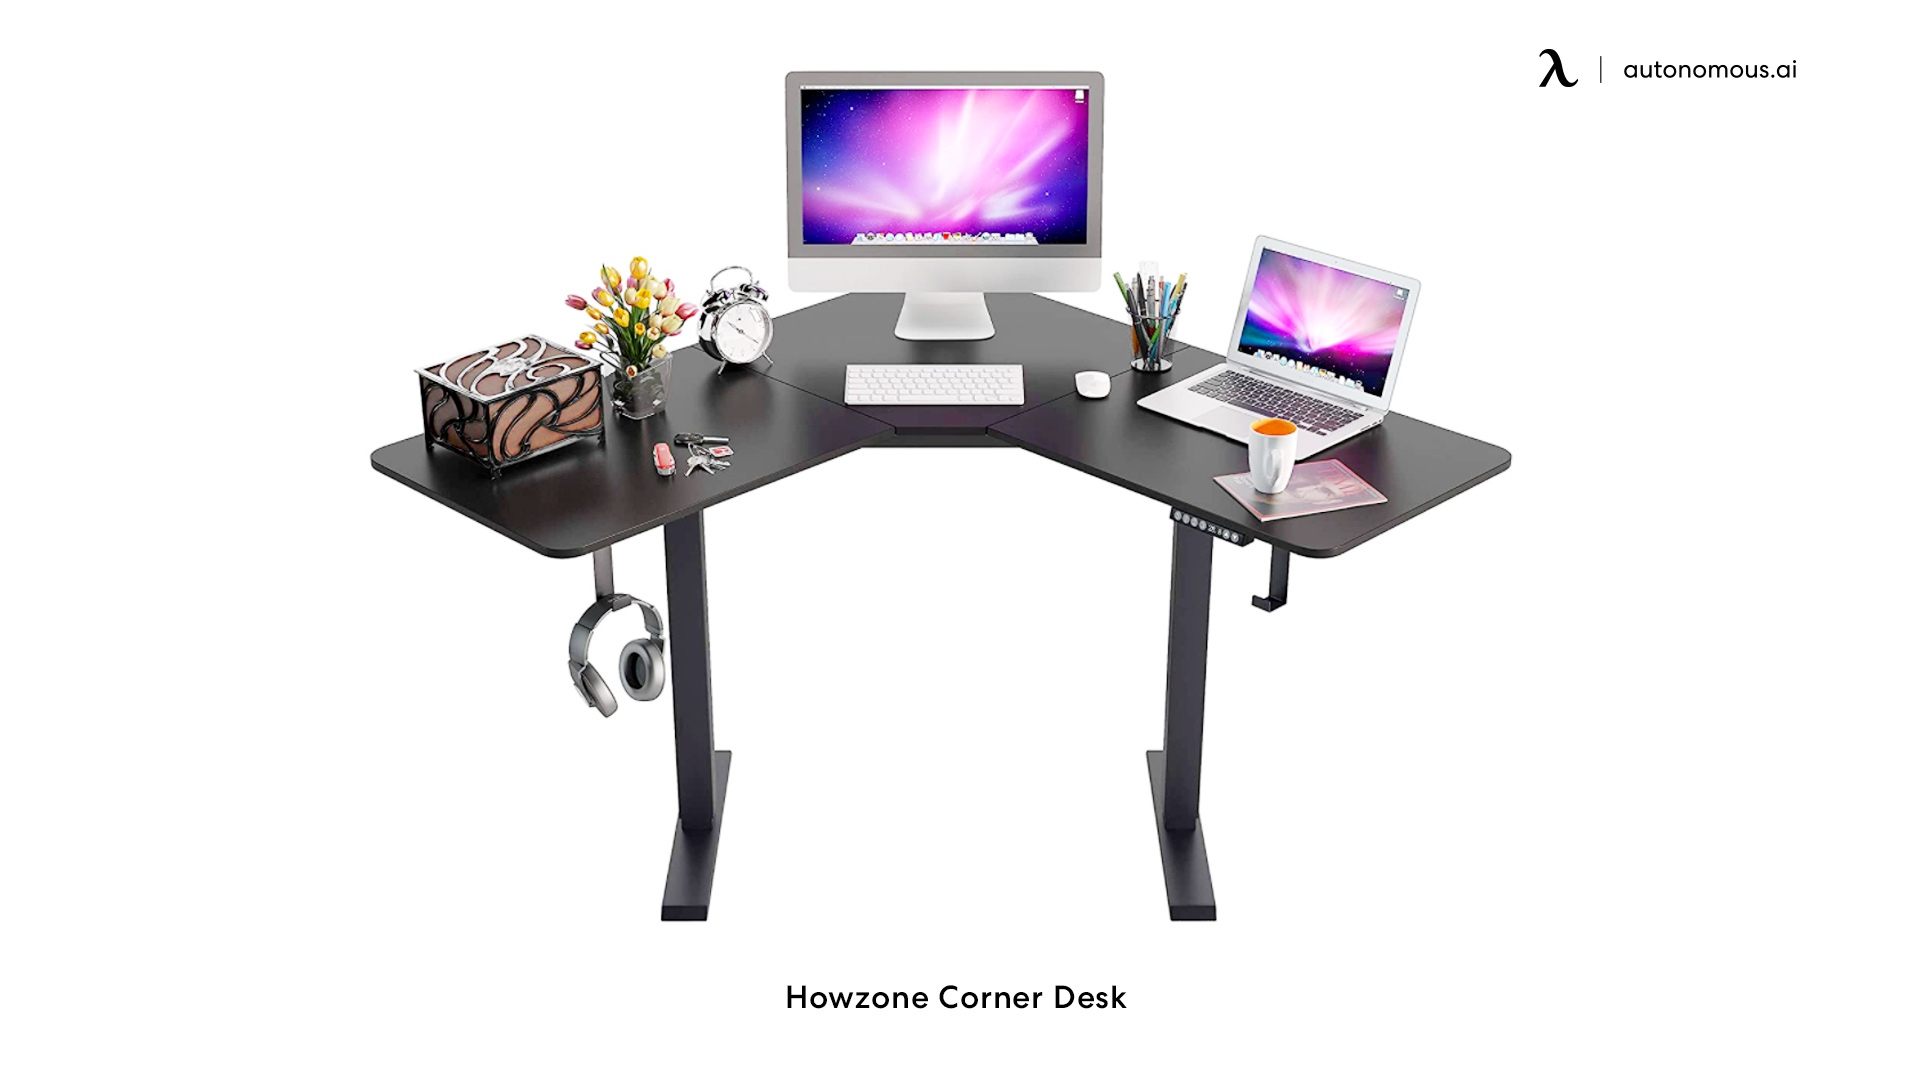 Howzone Corner Desk